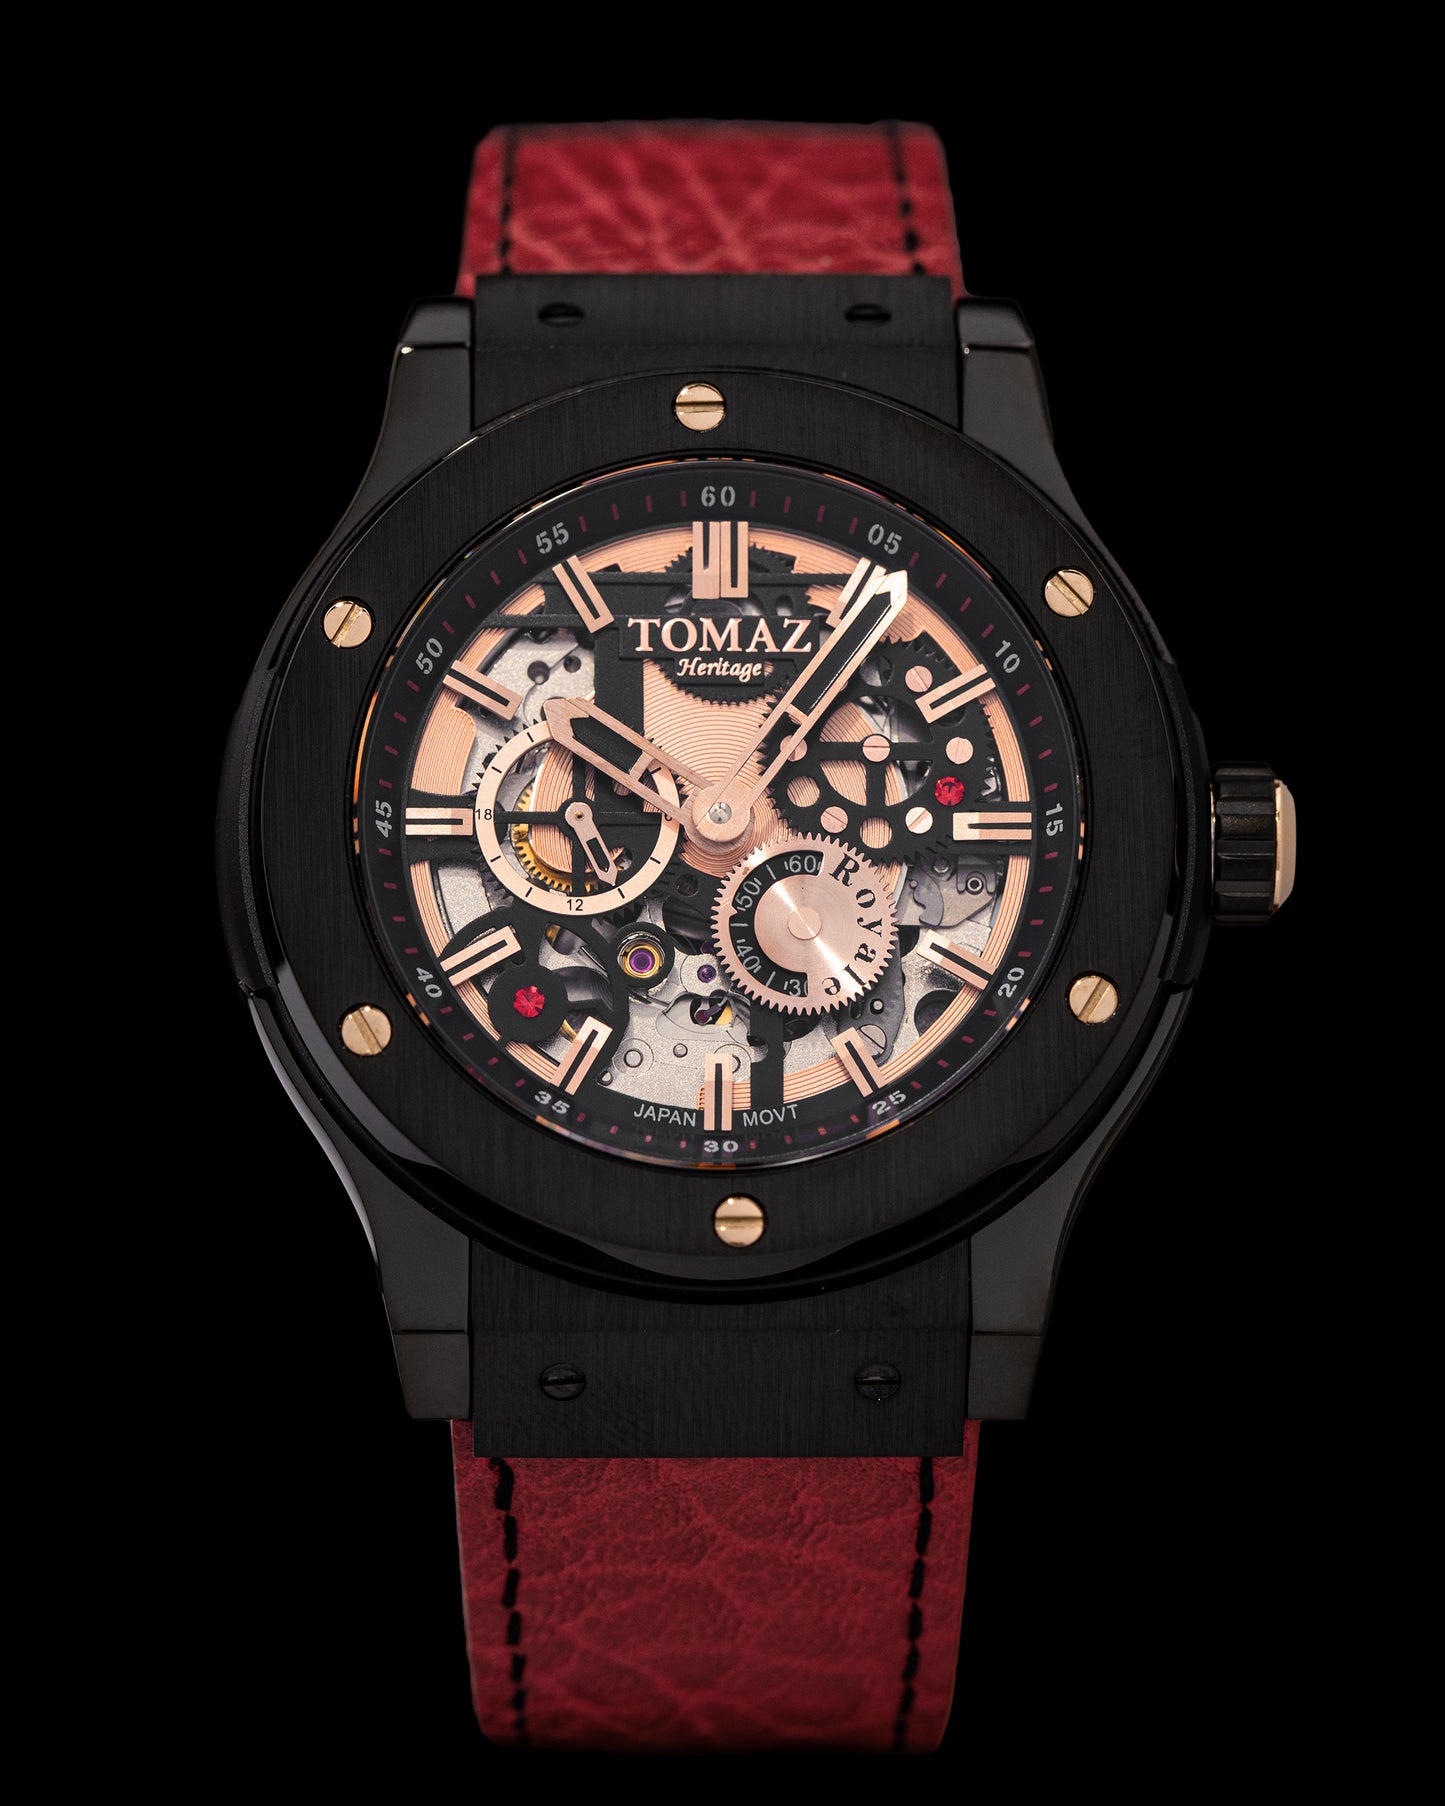 Tomaz Men's Watch TW014-D5 (Black) Red Leather Strap